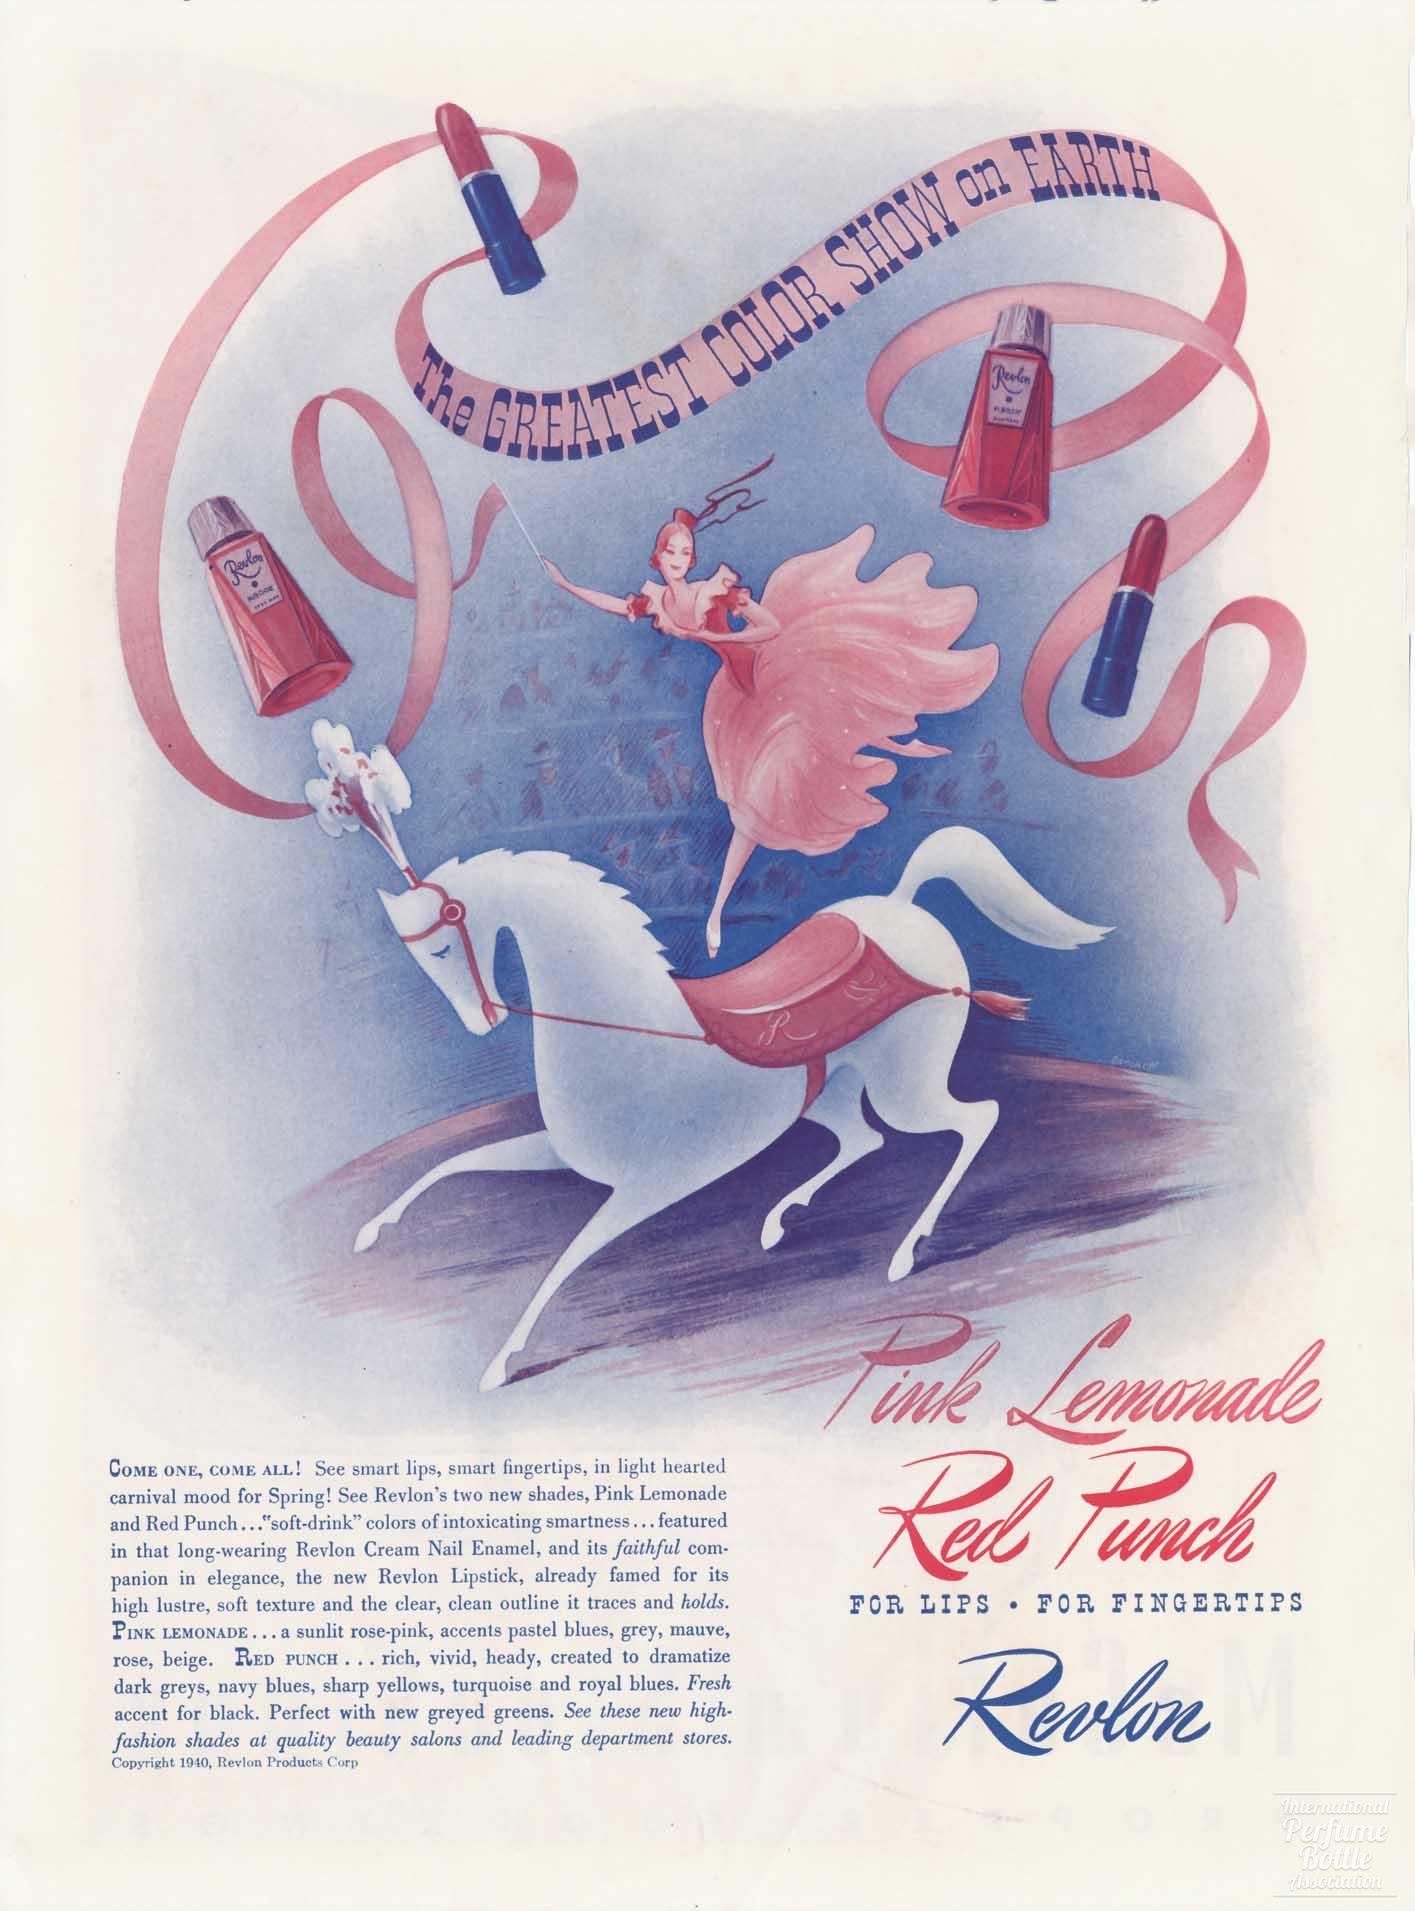 Lipstick and Nail Polish by Revlon Advertisement - 1940